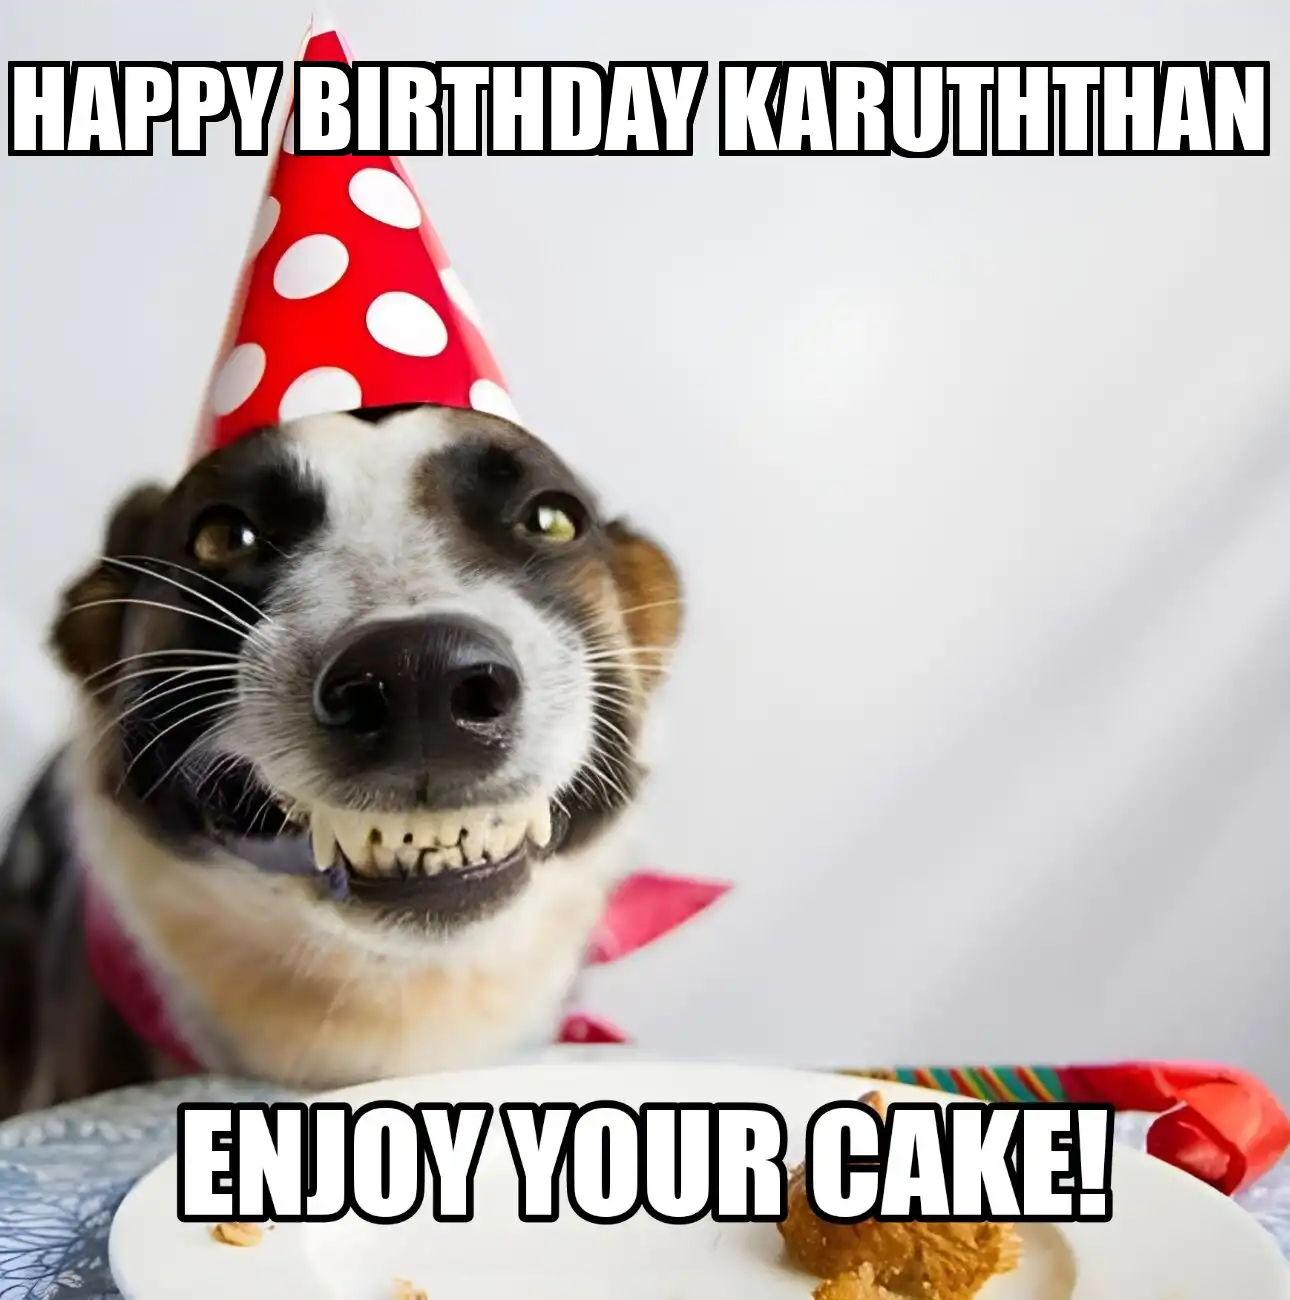 Happy Birthday Karuththan Enjoy Your Cake Dog Meme